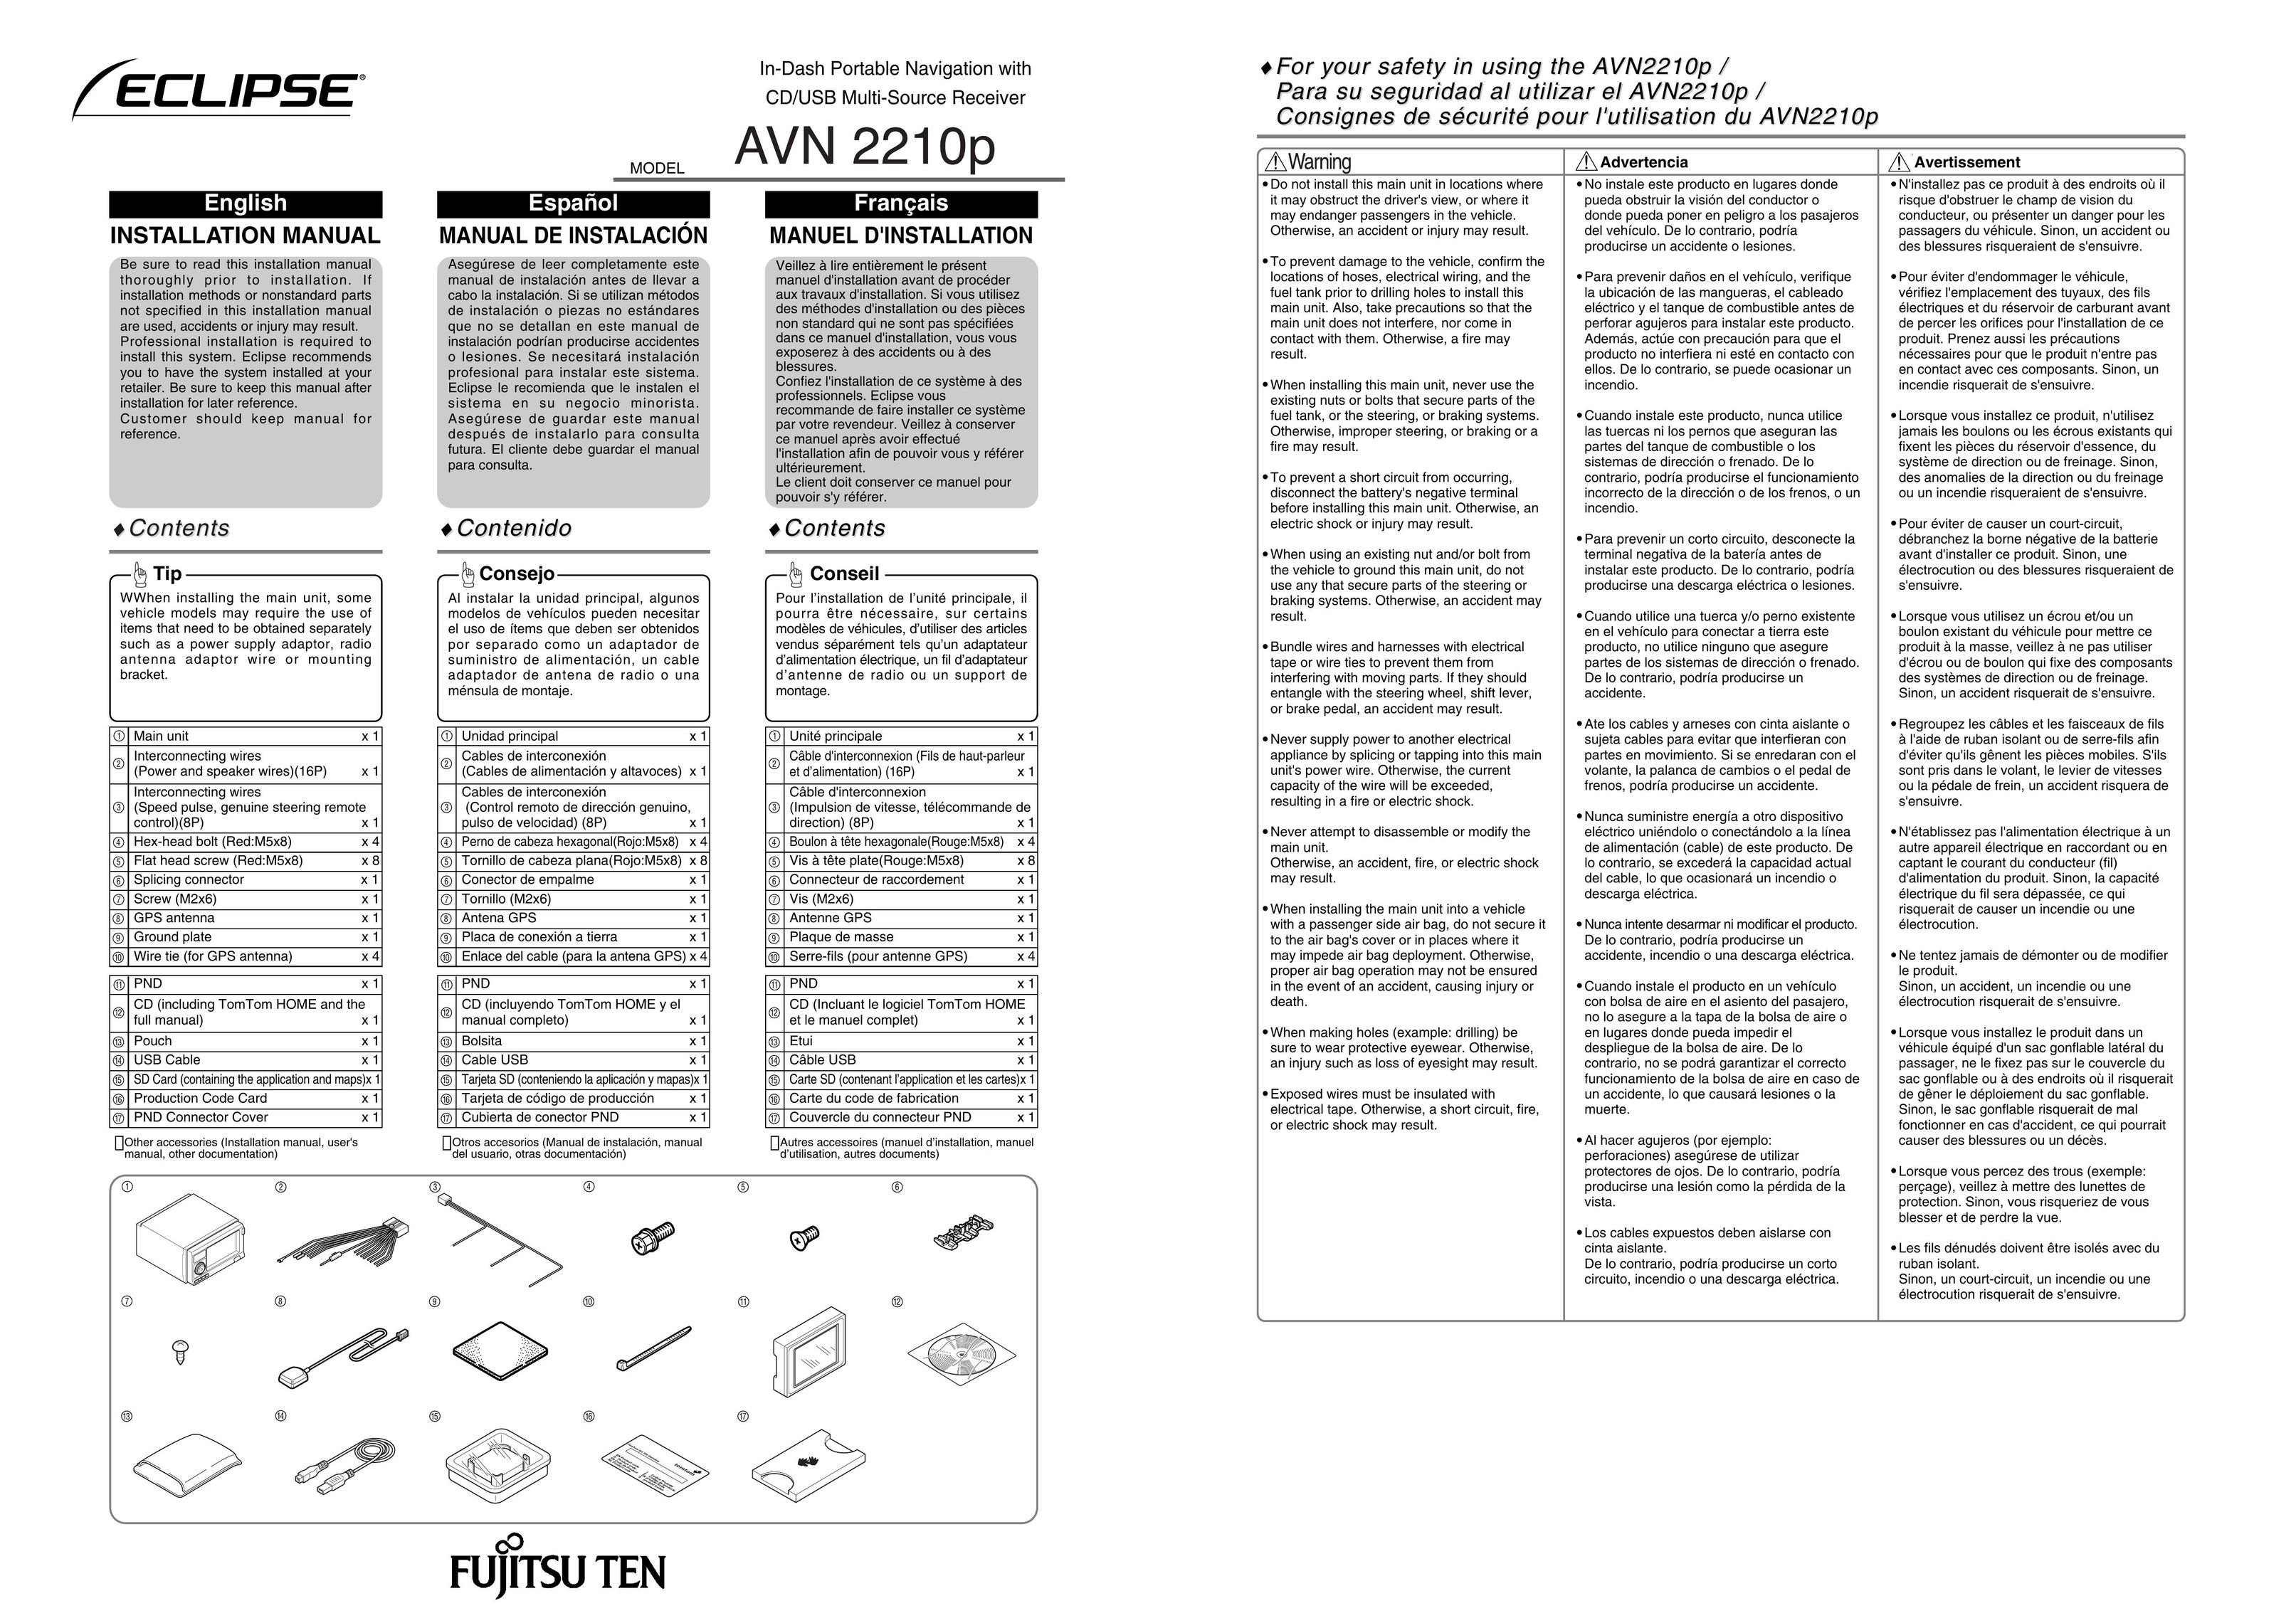 Eclipse - Fujitsu Ten AVN 2210P MP3 Player User Manual